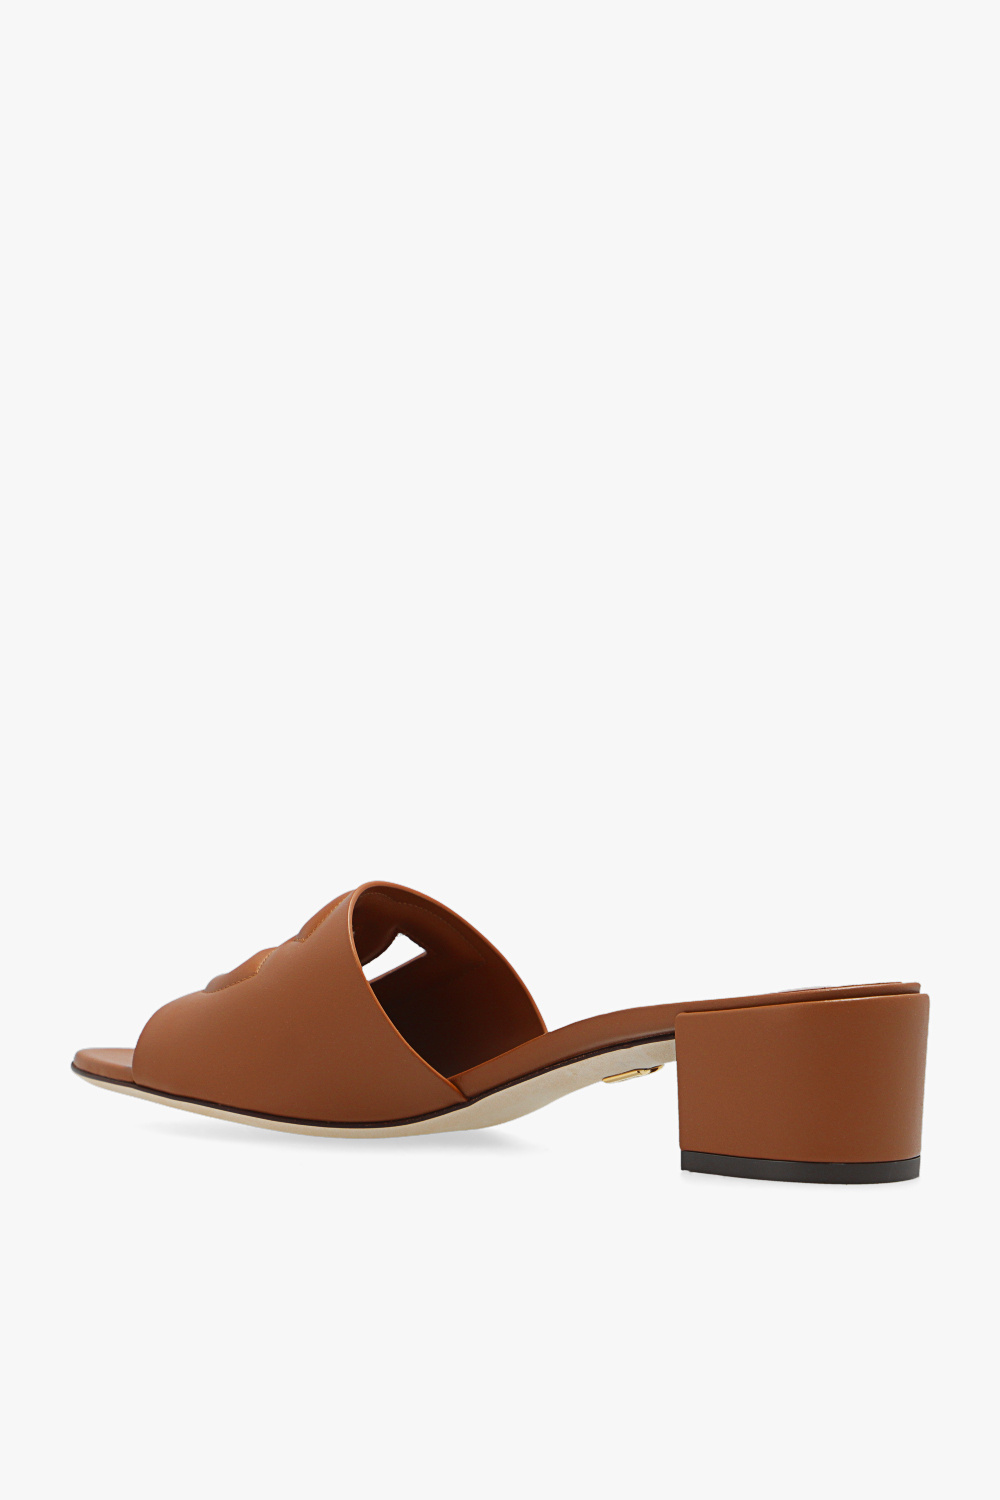 Dolce & Gabbana ‘Bianca’ heeled slides